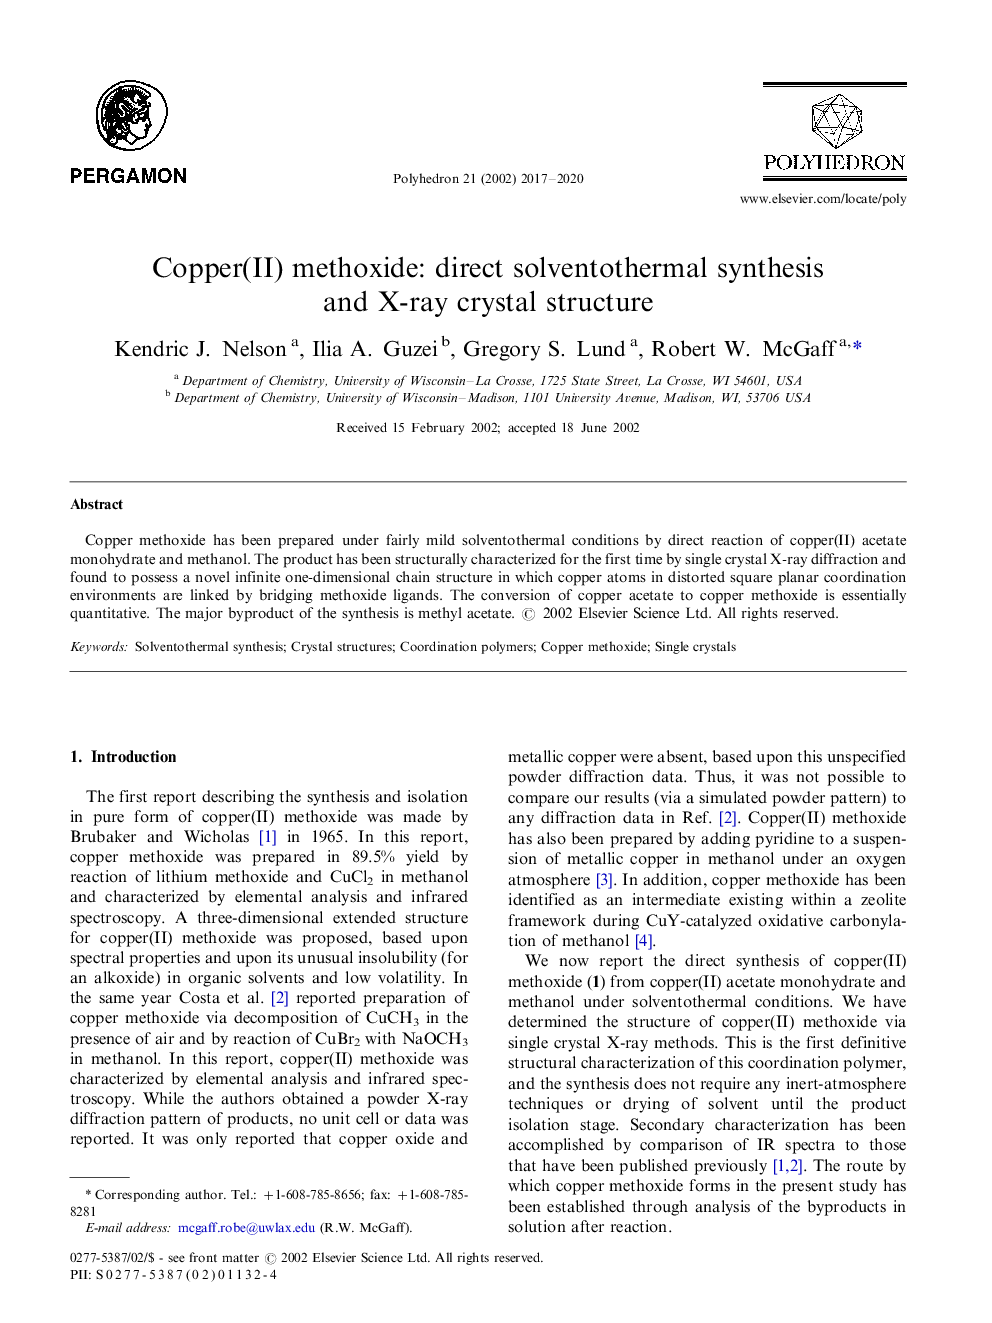 مس (II) methoxide: سنتز solventothermal مستقیم و ساختار بلوری اشعه ایکس 